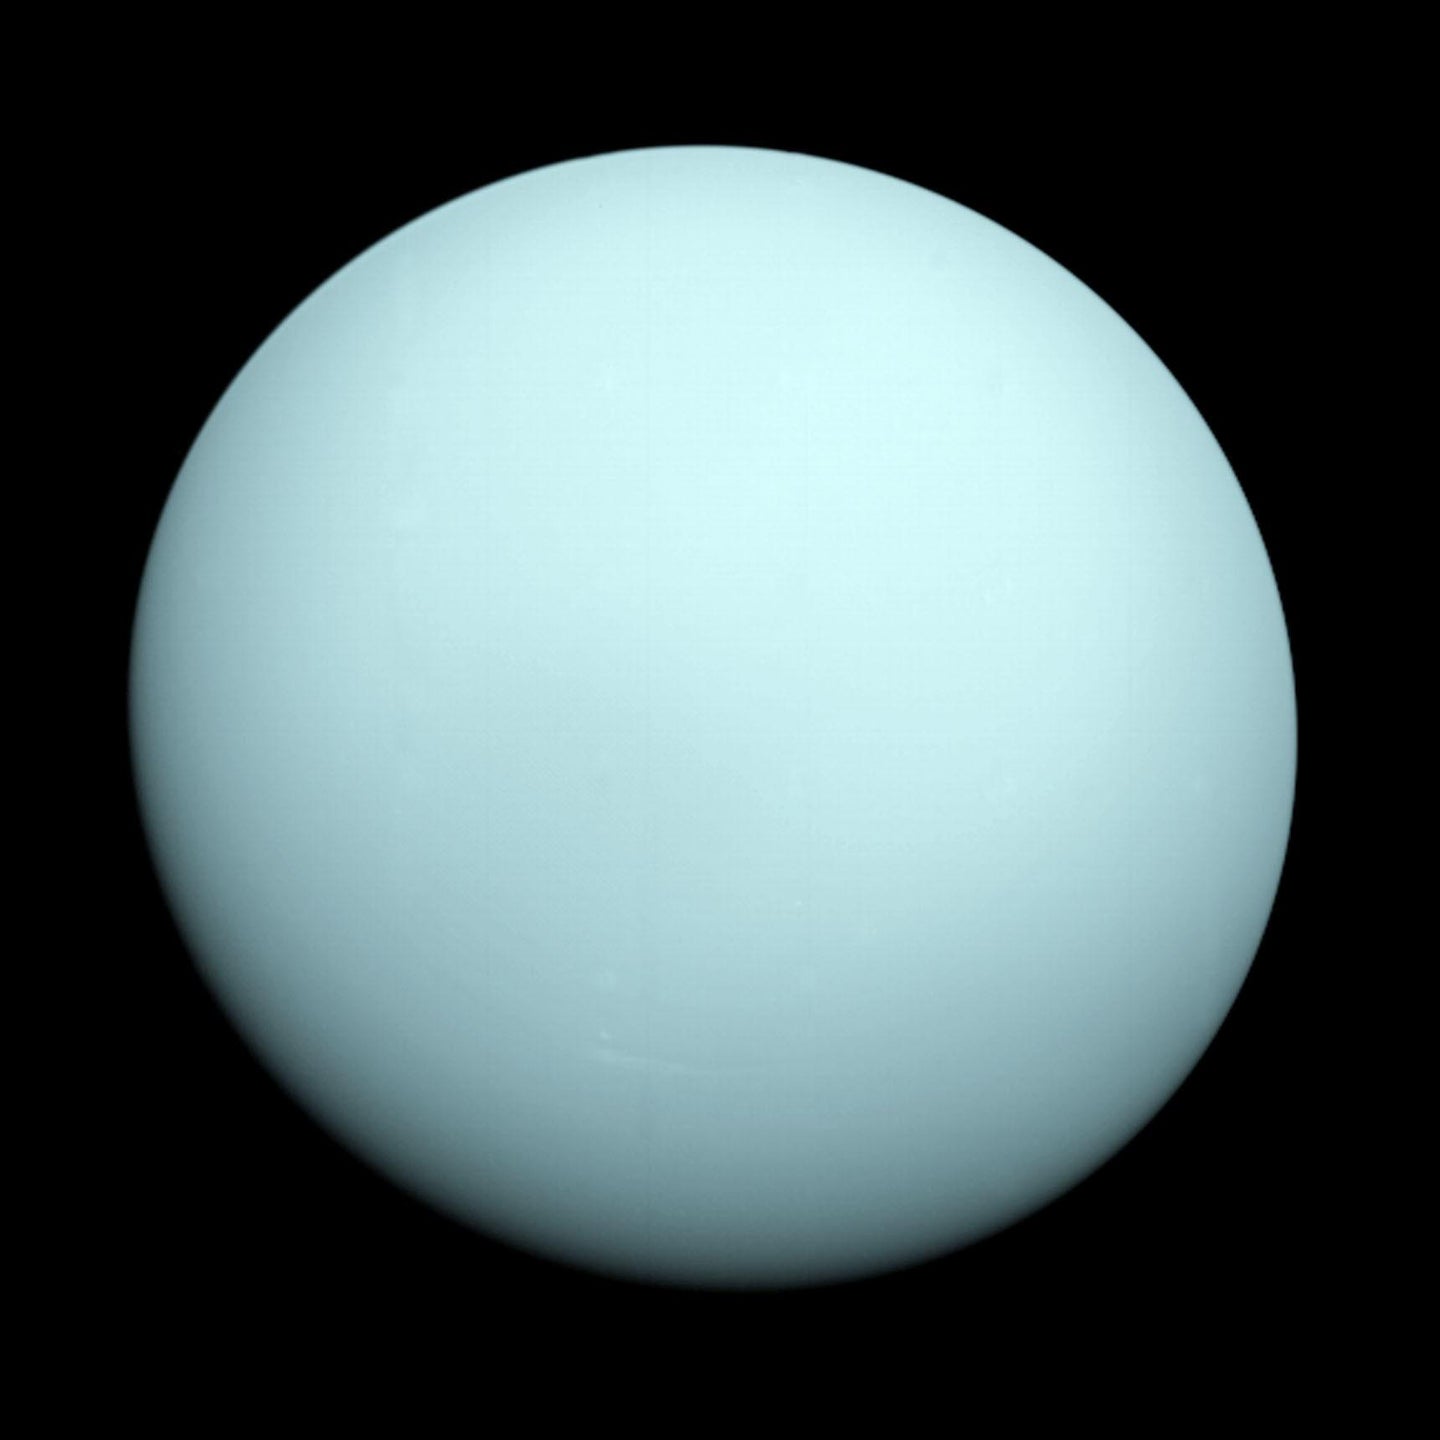 Voyager 2's image of Uranus.